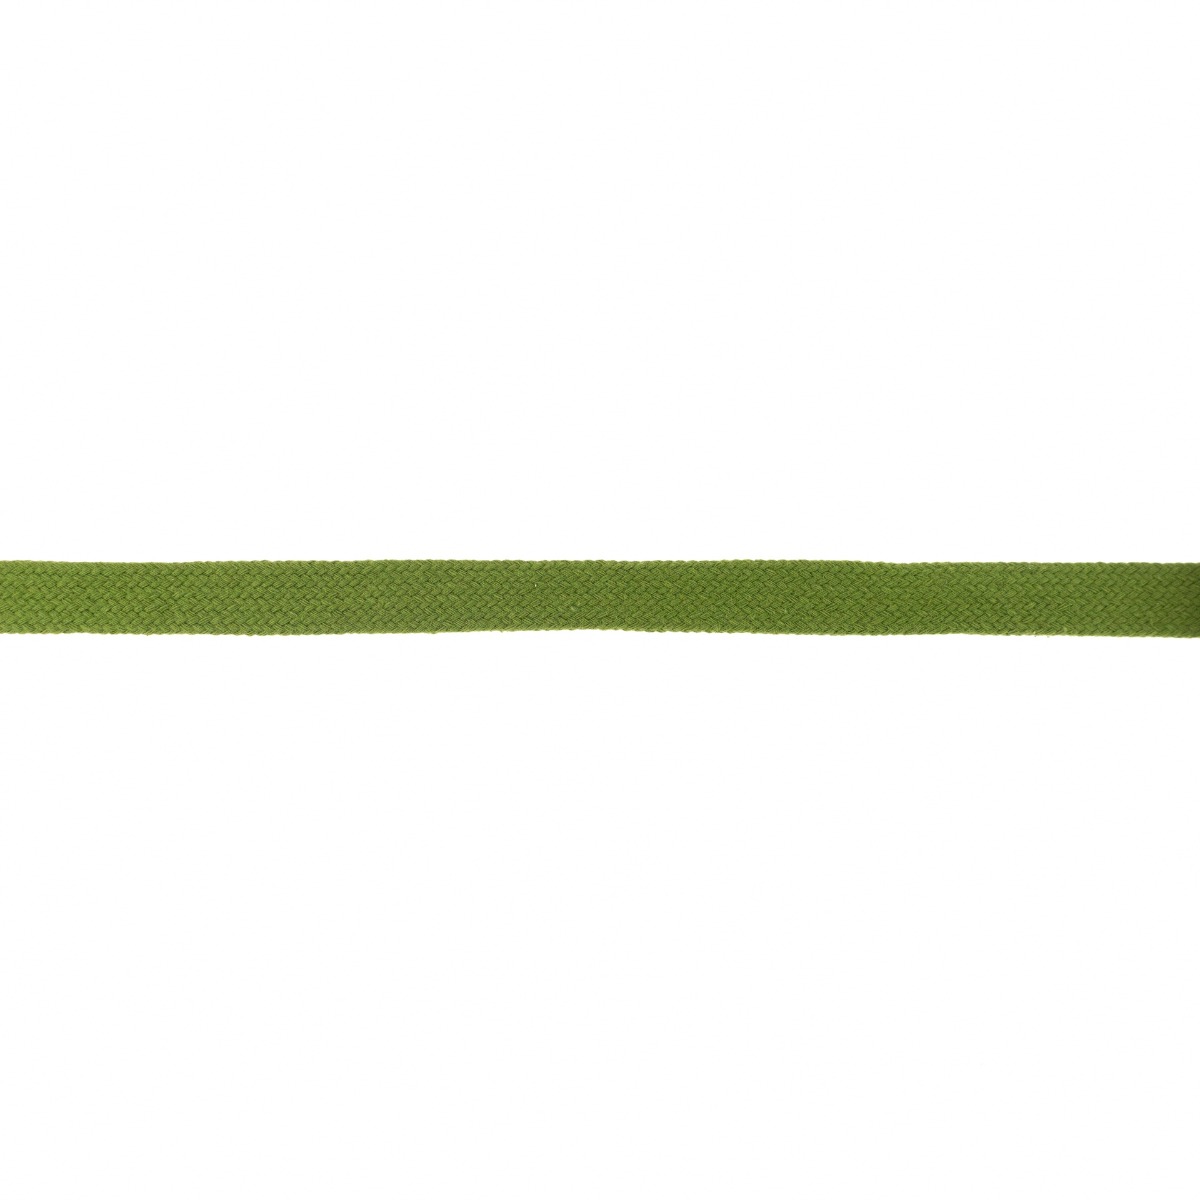 Hoodieband Kapuzenkordel 15 mm Waldgrün